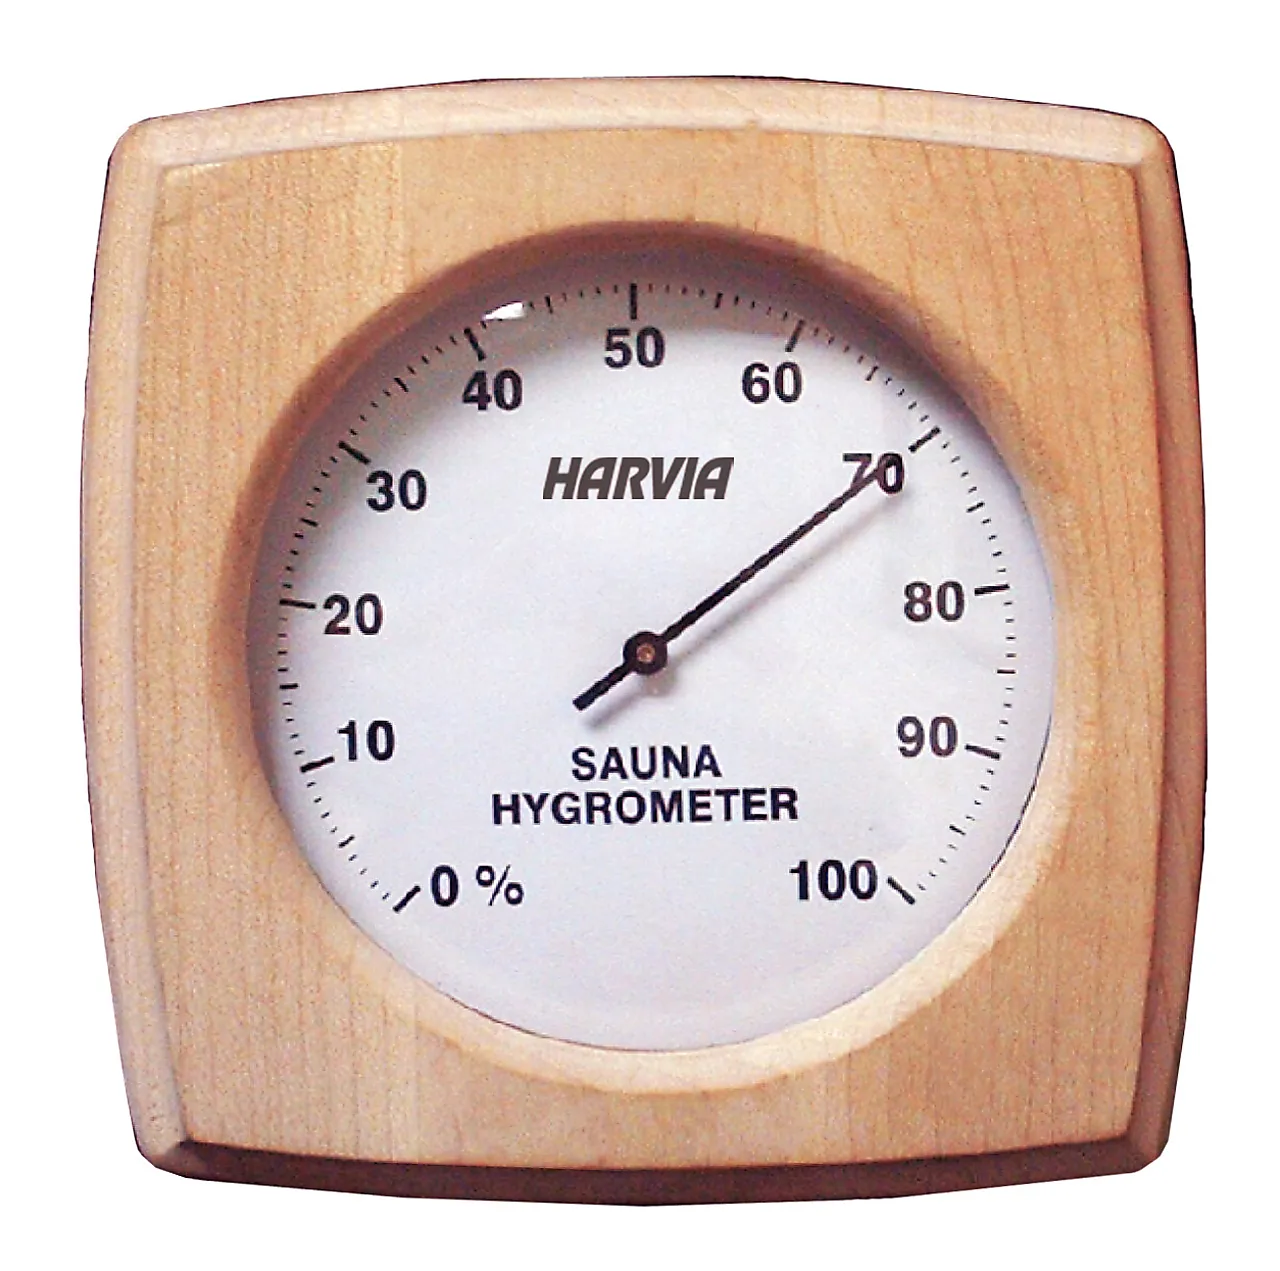 Badstuhygrometer harvia